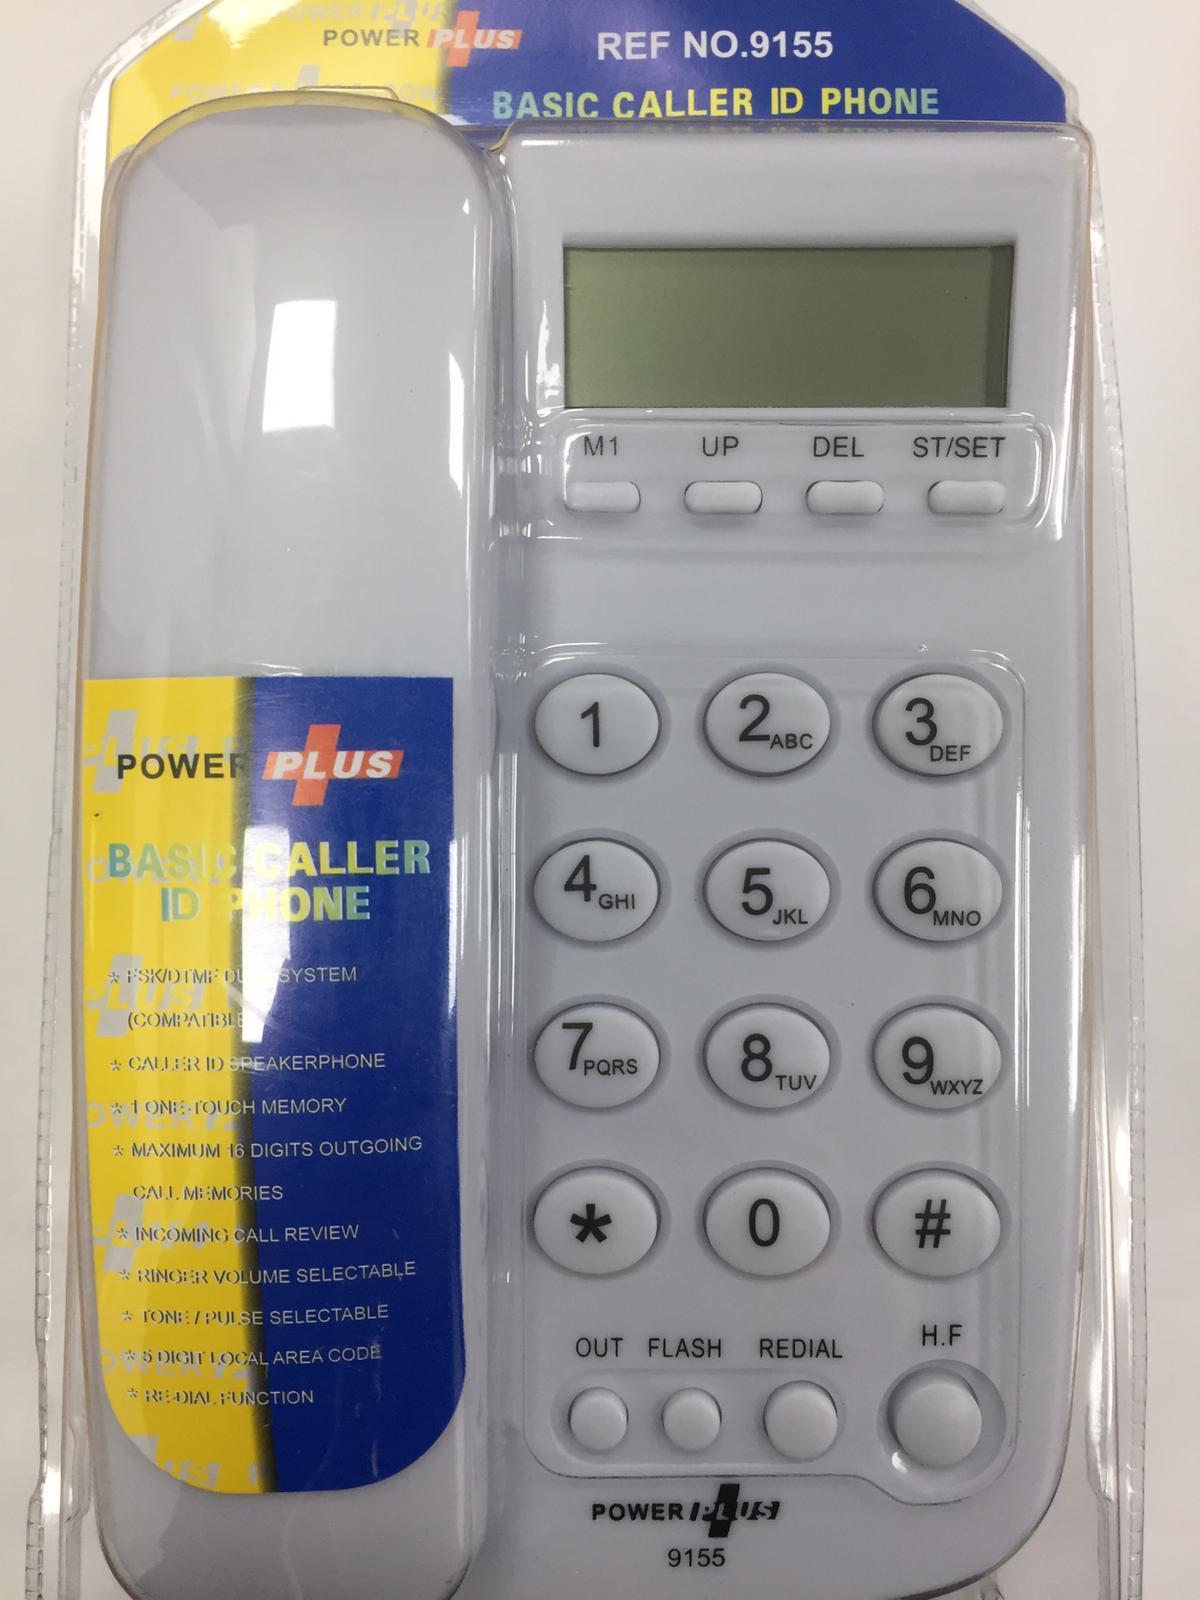 Powerplus Caller ID phone